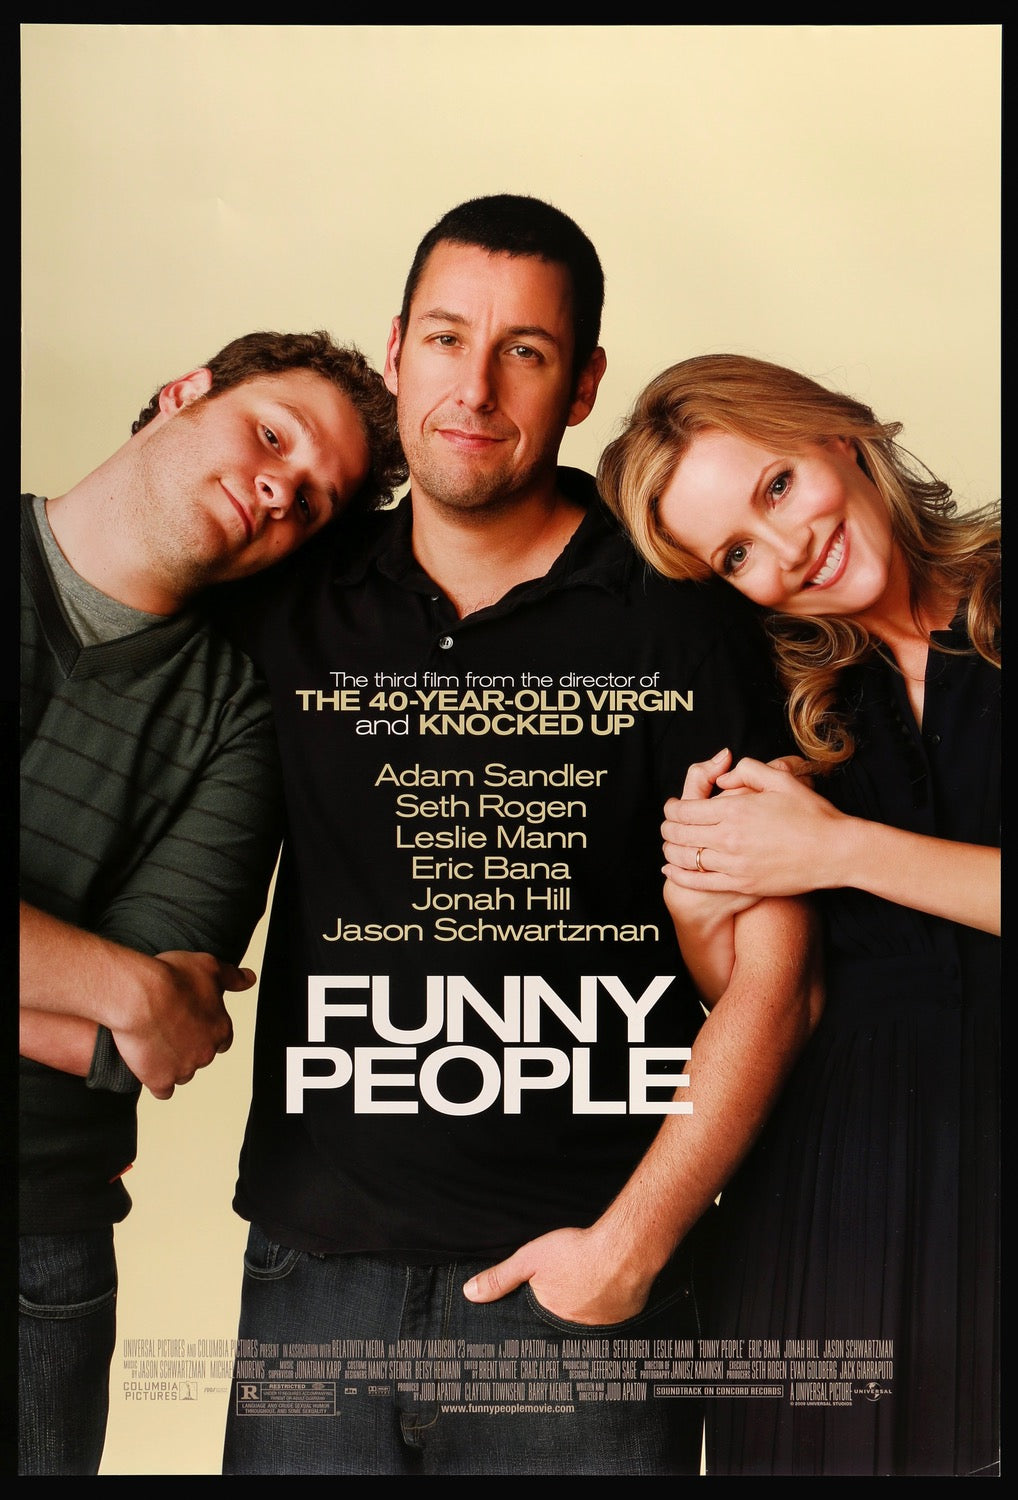 Funny People (2009) original movie poster for sale at Original Film Art